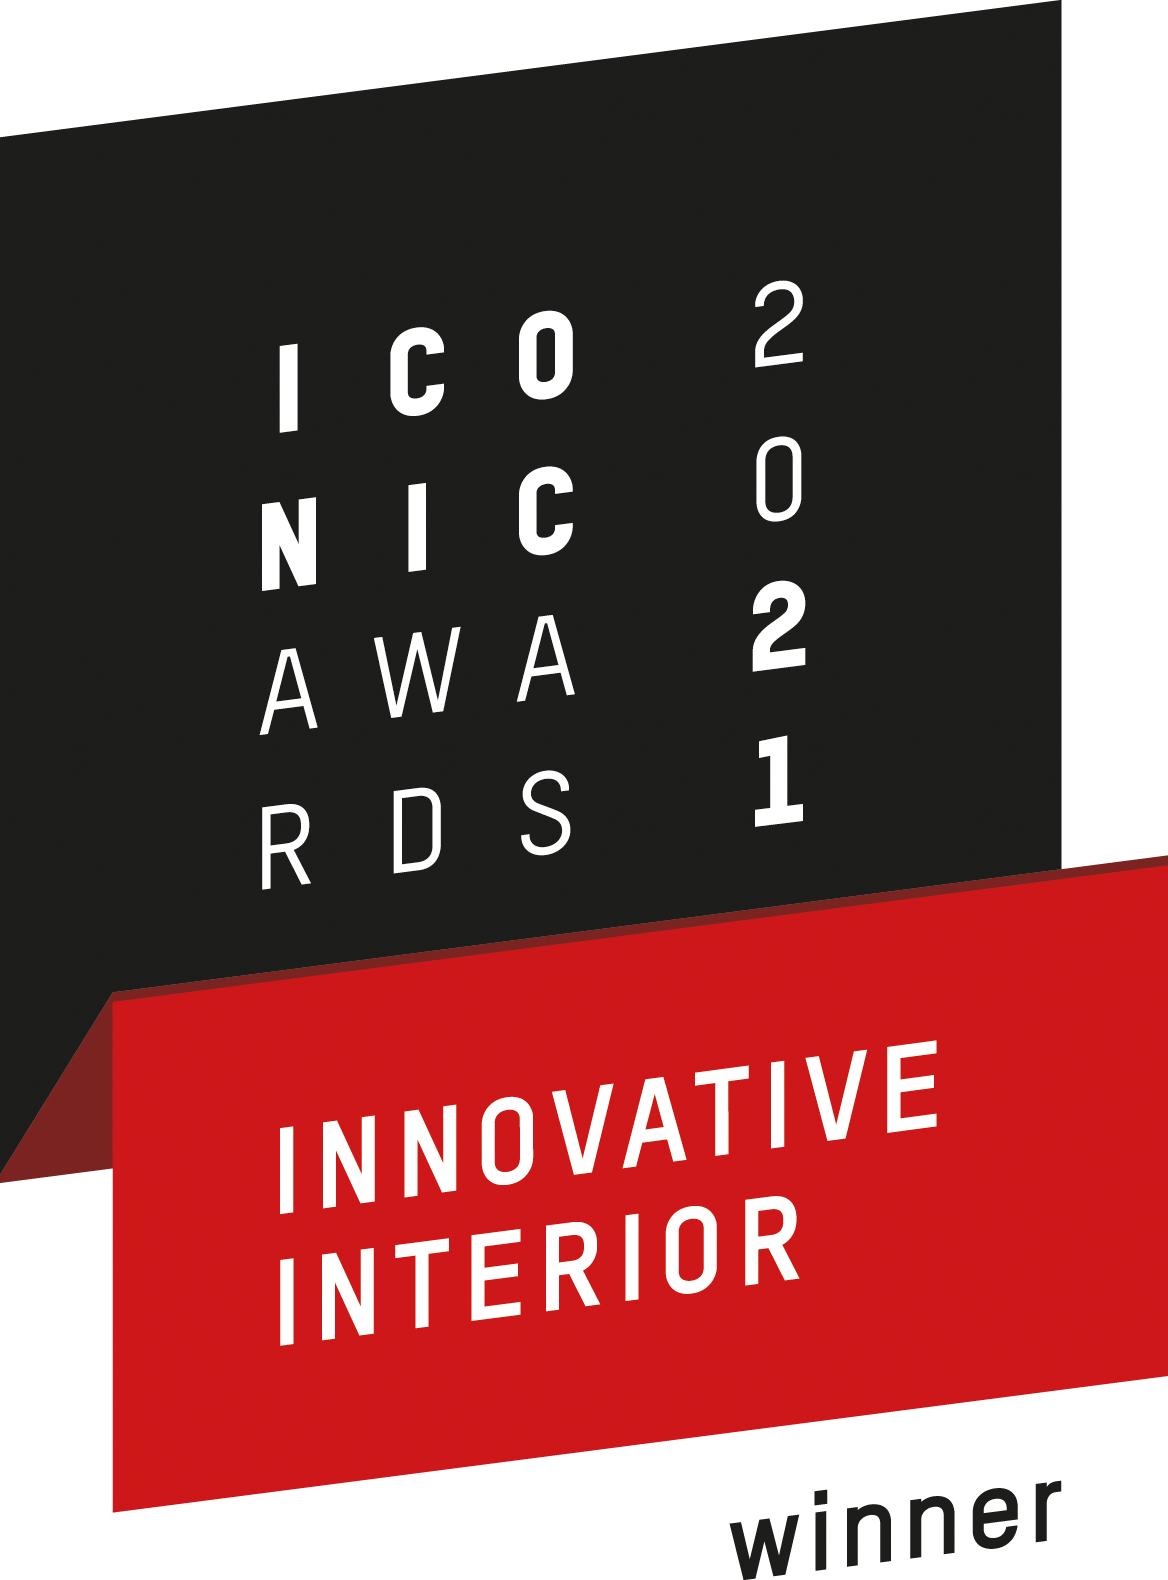 Tojo-solo ist ICONIC AWARD: Innovative Interior 2021 winner